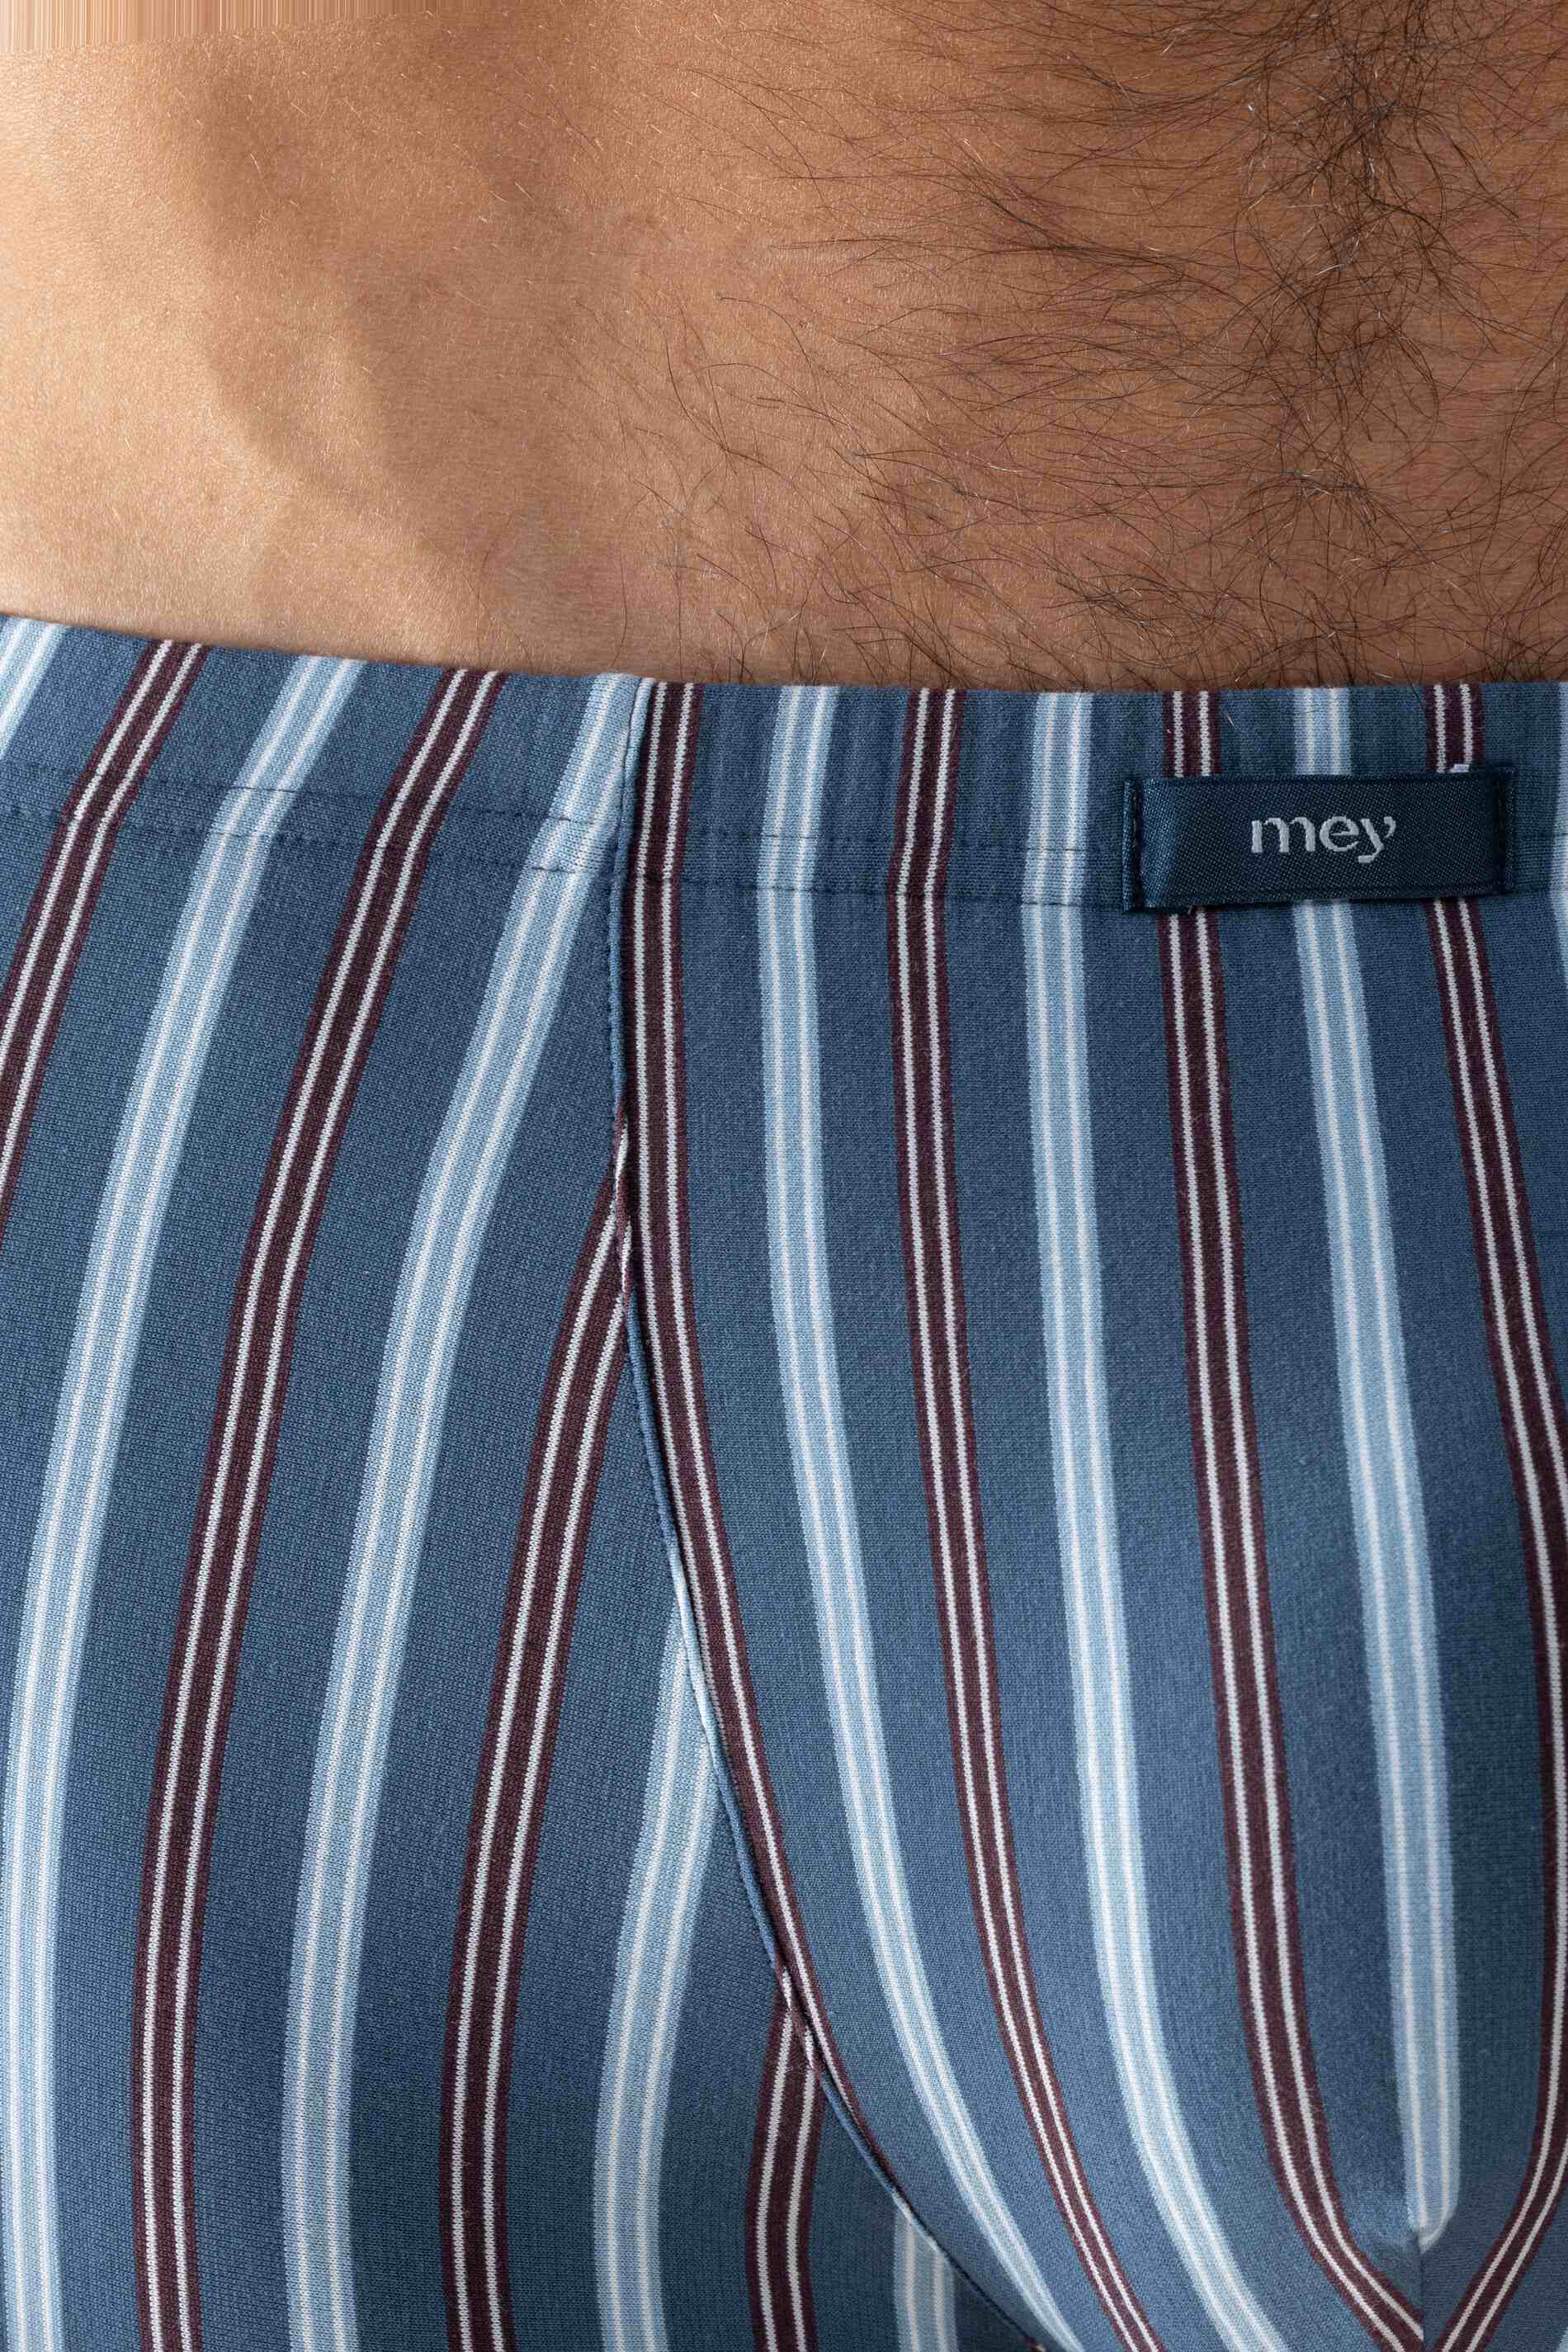 Shorty Serie Blue Striped Detailansicht 01 | mey®